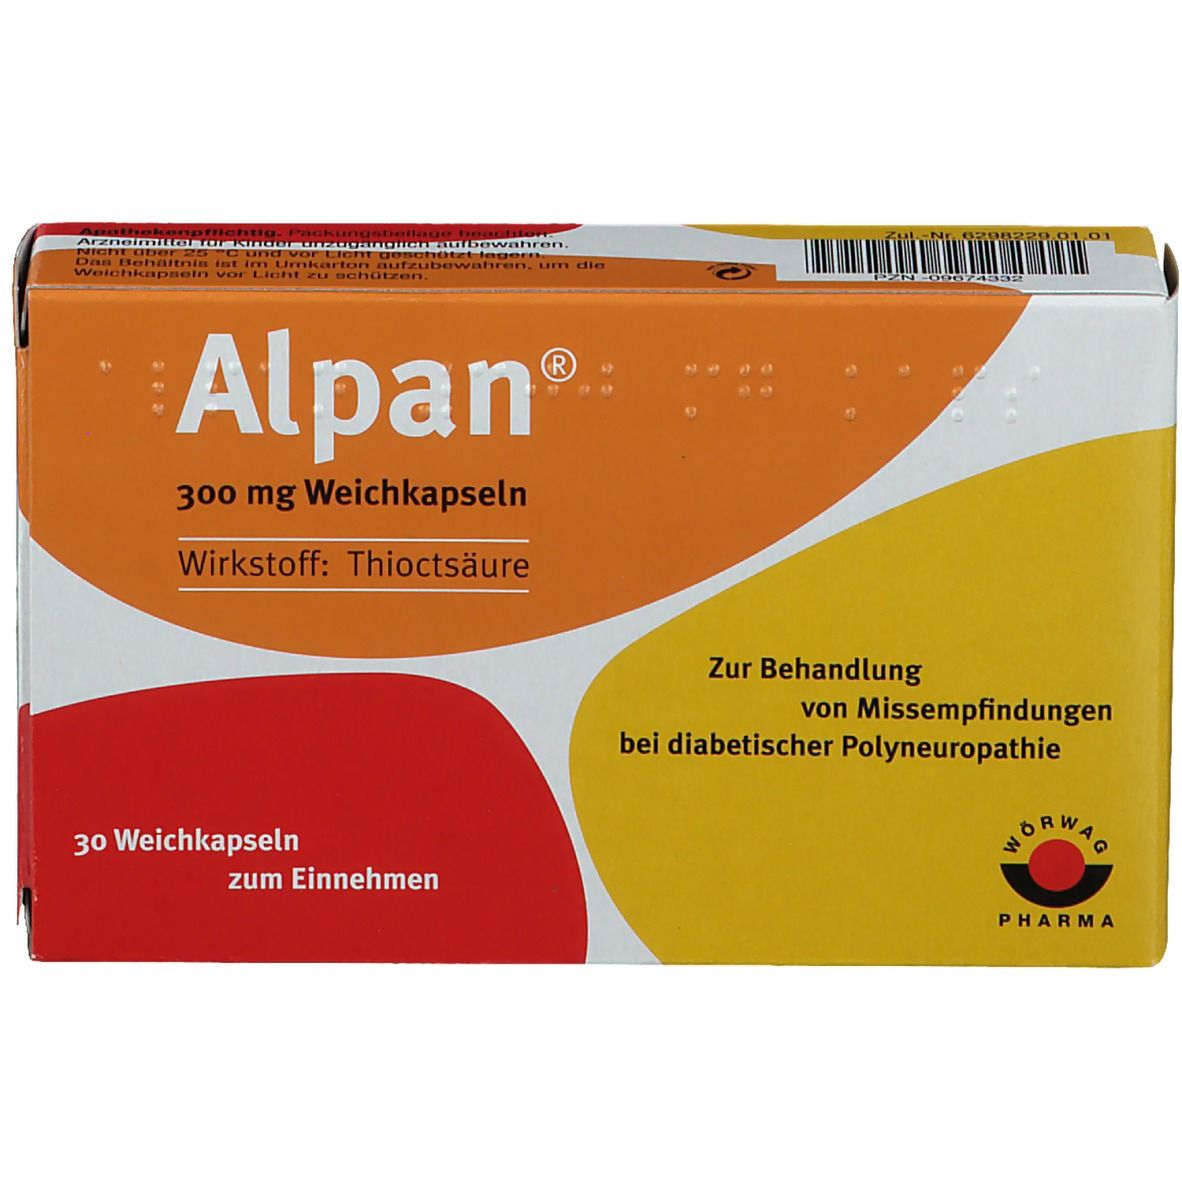 Alpan® 300 mg Weichkapseln